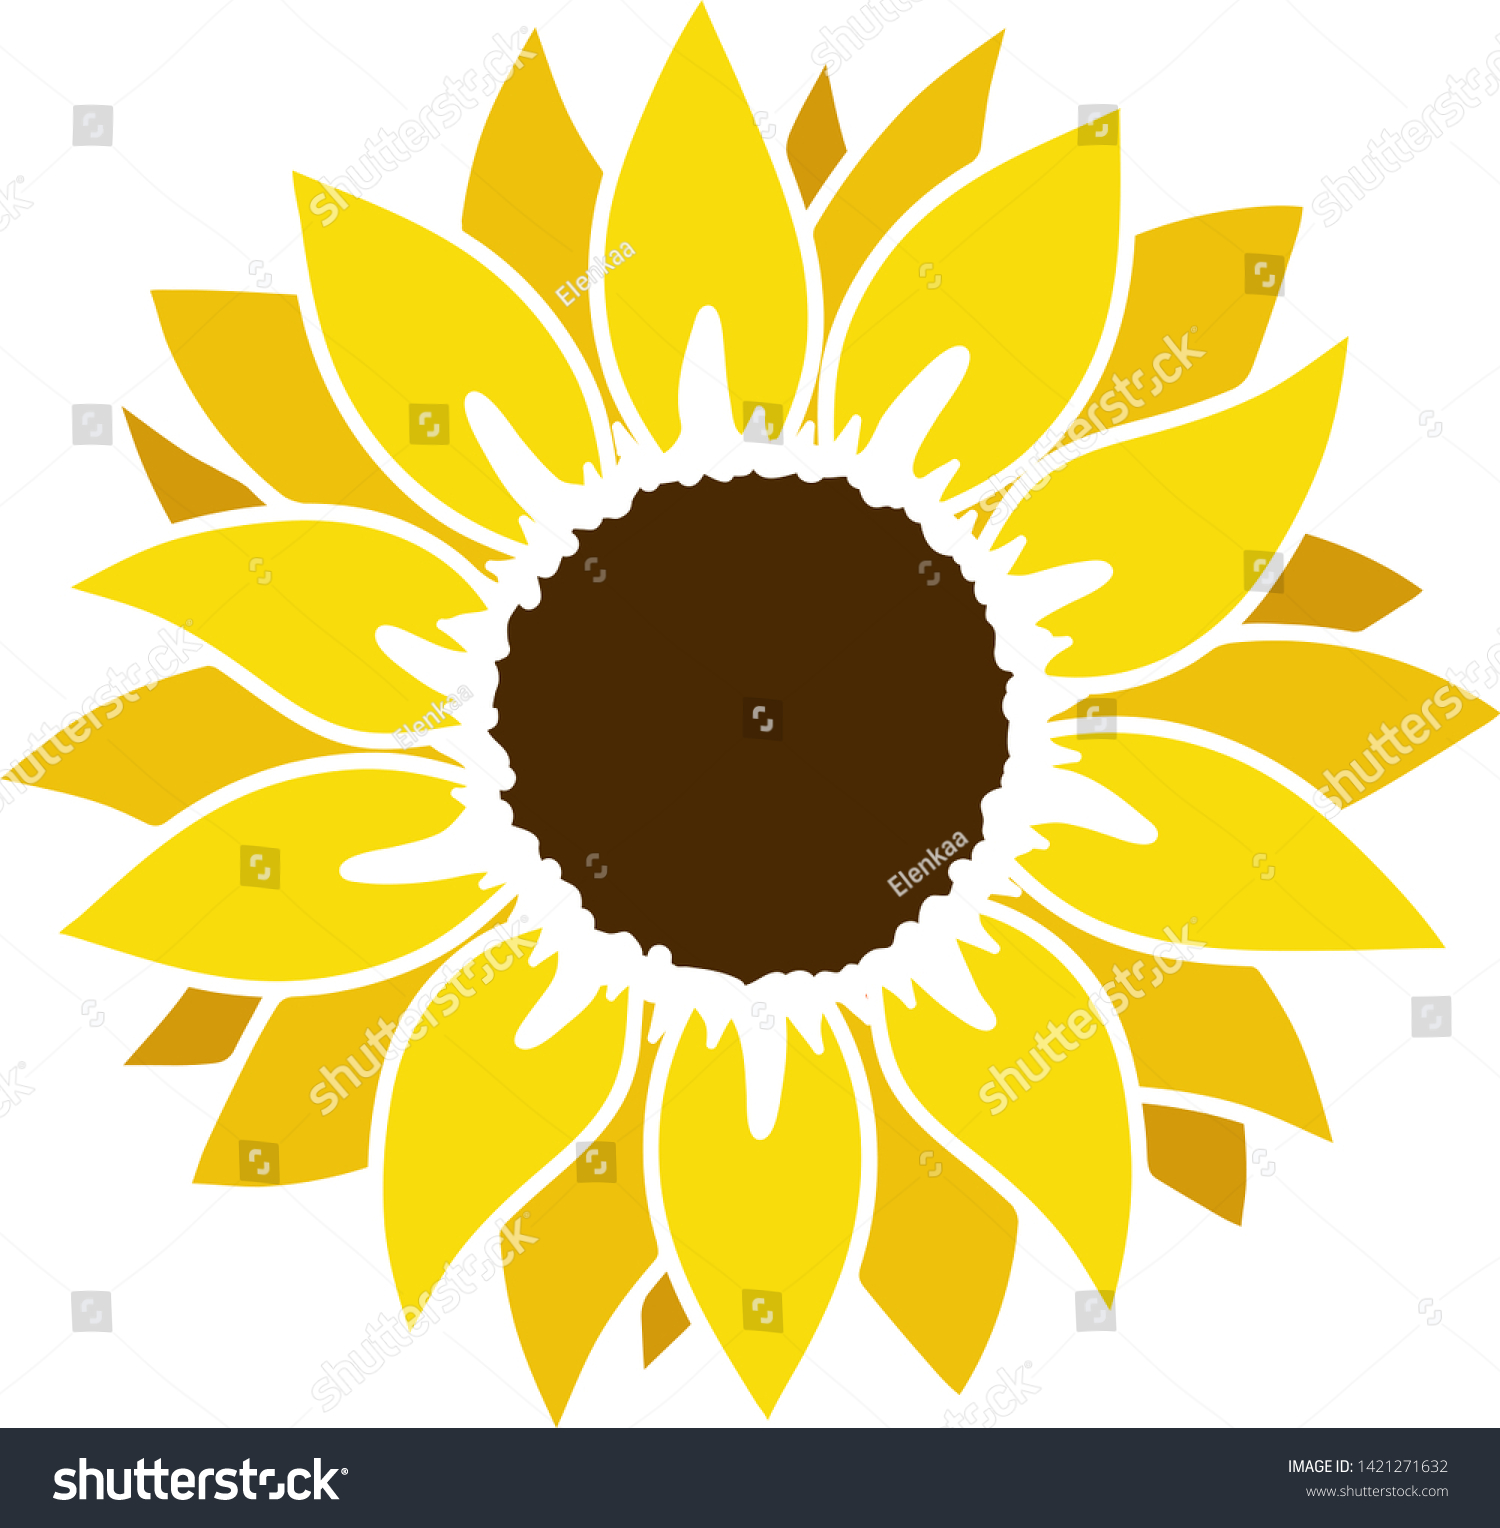 1,019 Sunflower stencil Images, Stock Photos & Vectors | Shutterstock